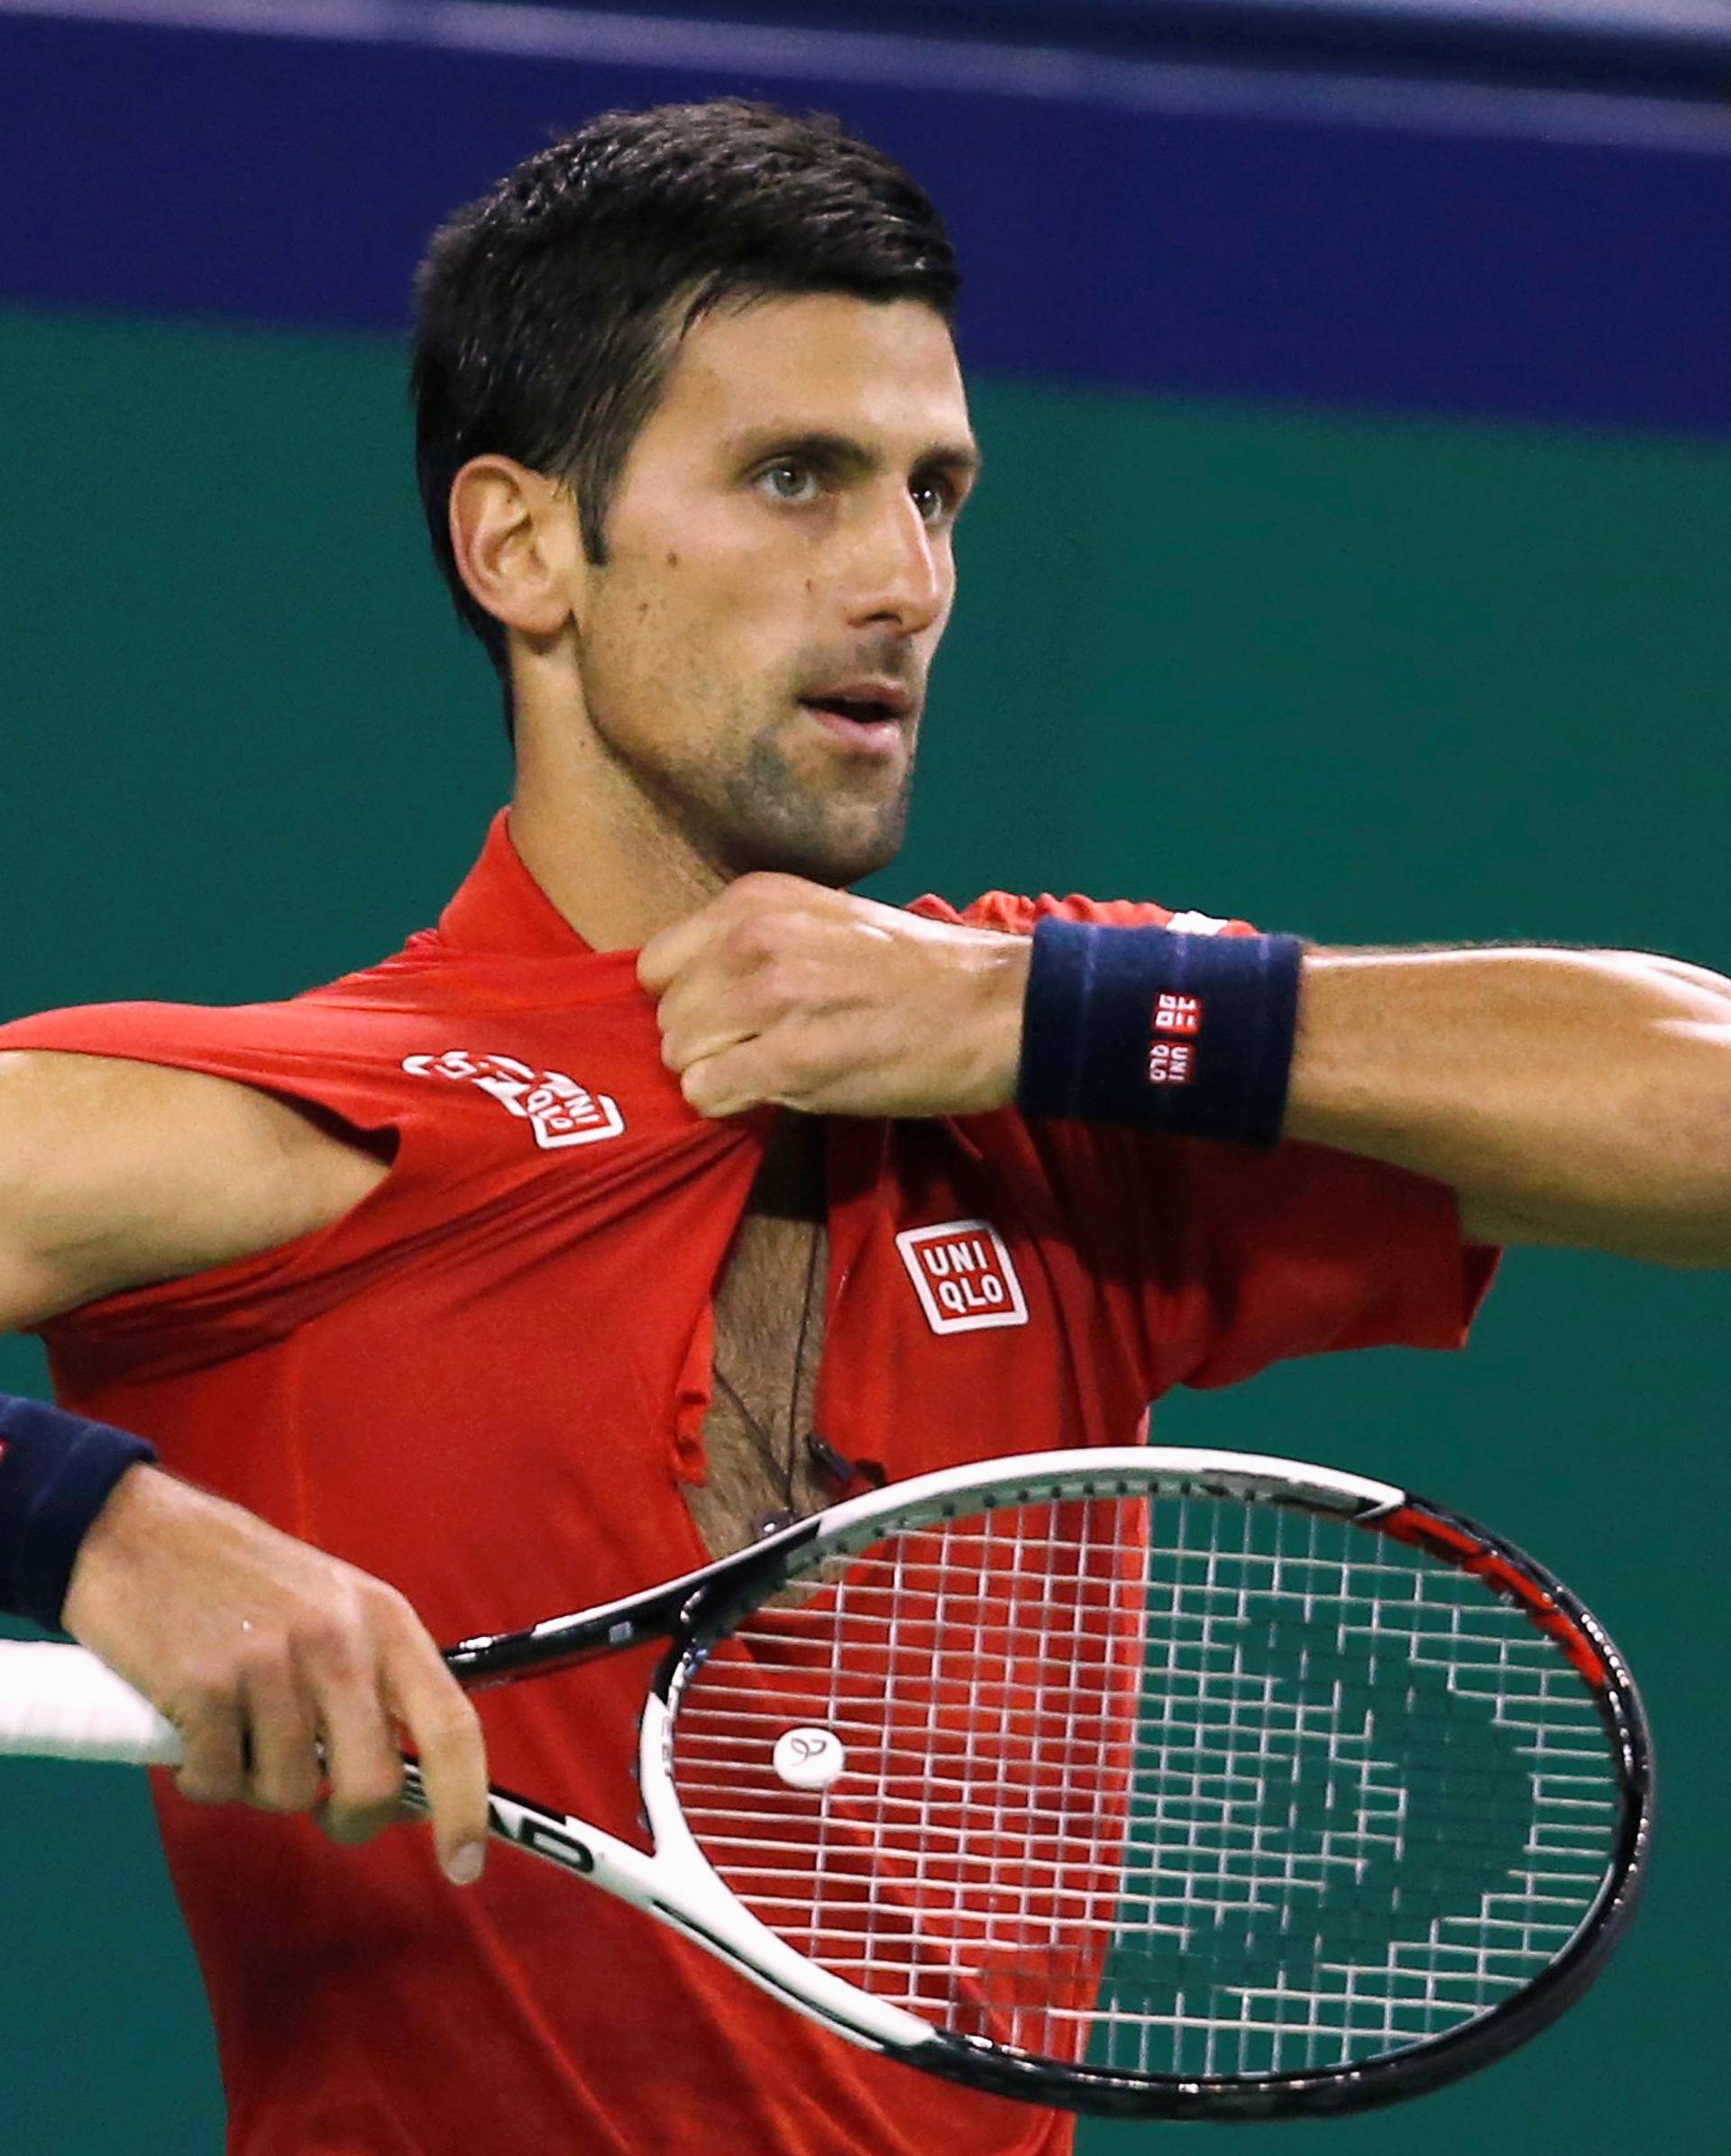 Tennis - Shanghai Masters tennis tournament - Novak Djokovic of Serbia v Roberto Bautista Agut of Spain